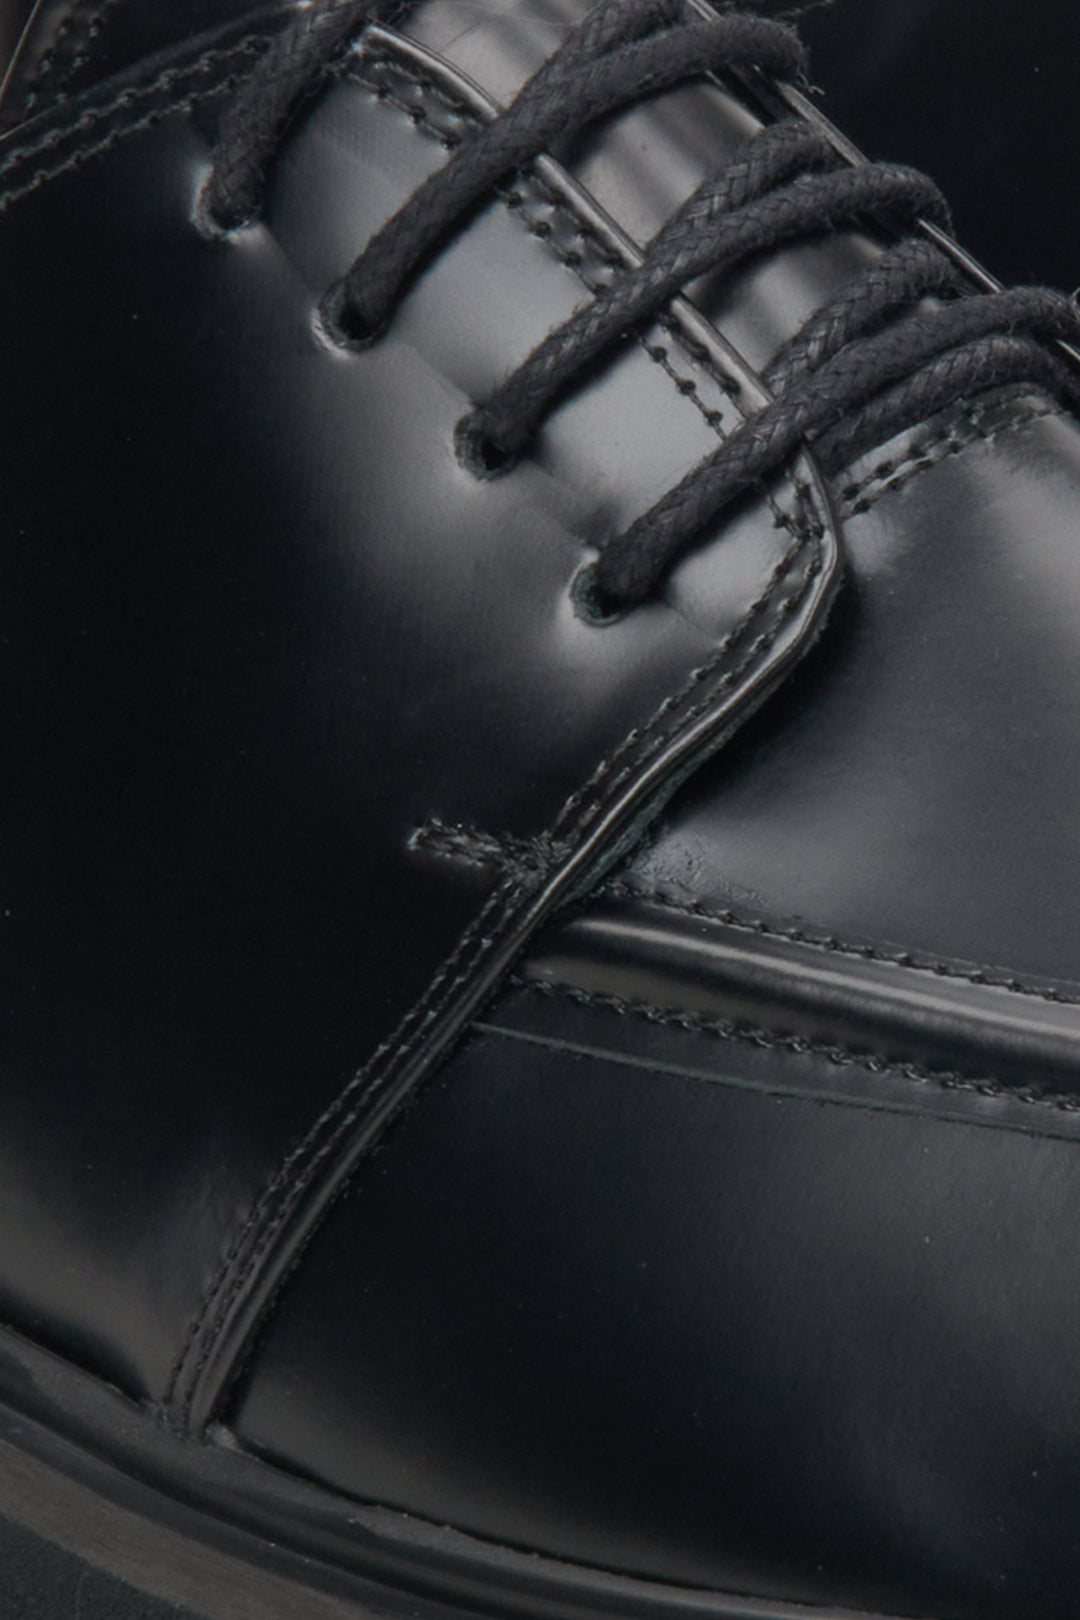 Women's black leather lace-up shoes by Estro - close-up on details.